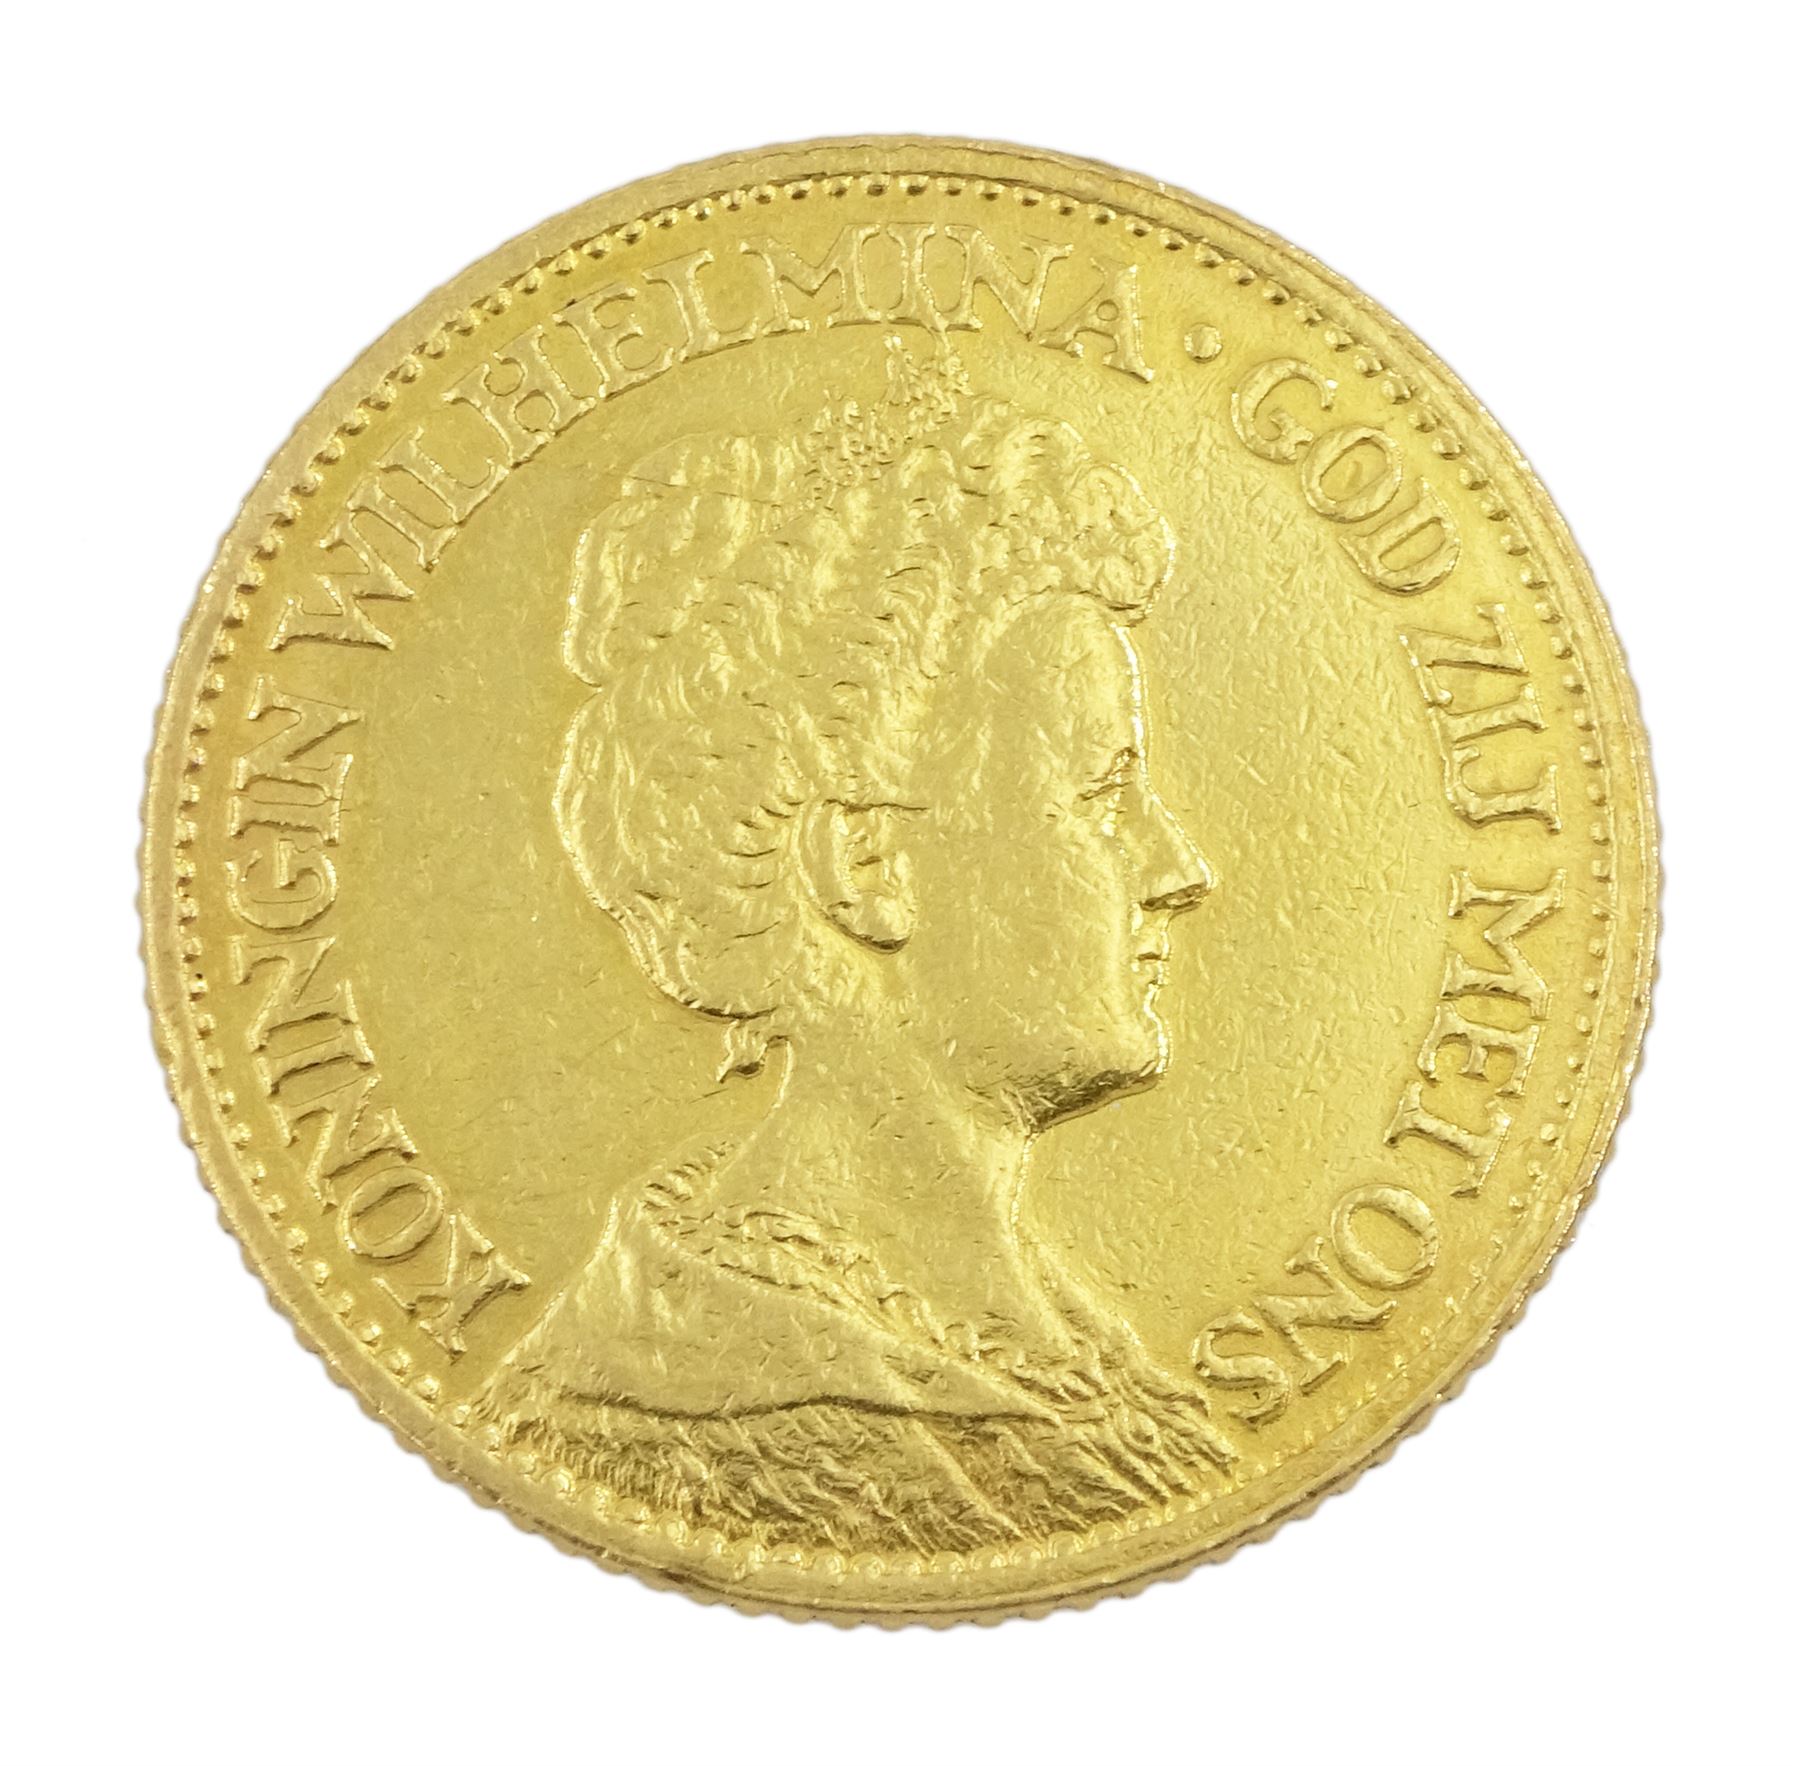 Netherlands 1911 gold ten guilders coin